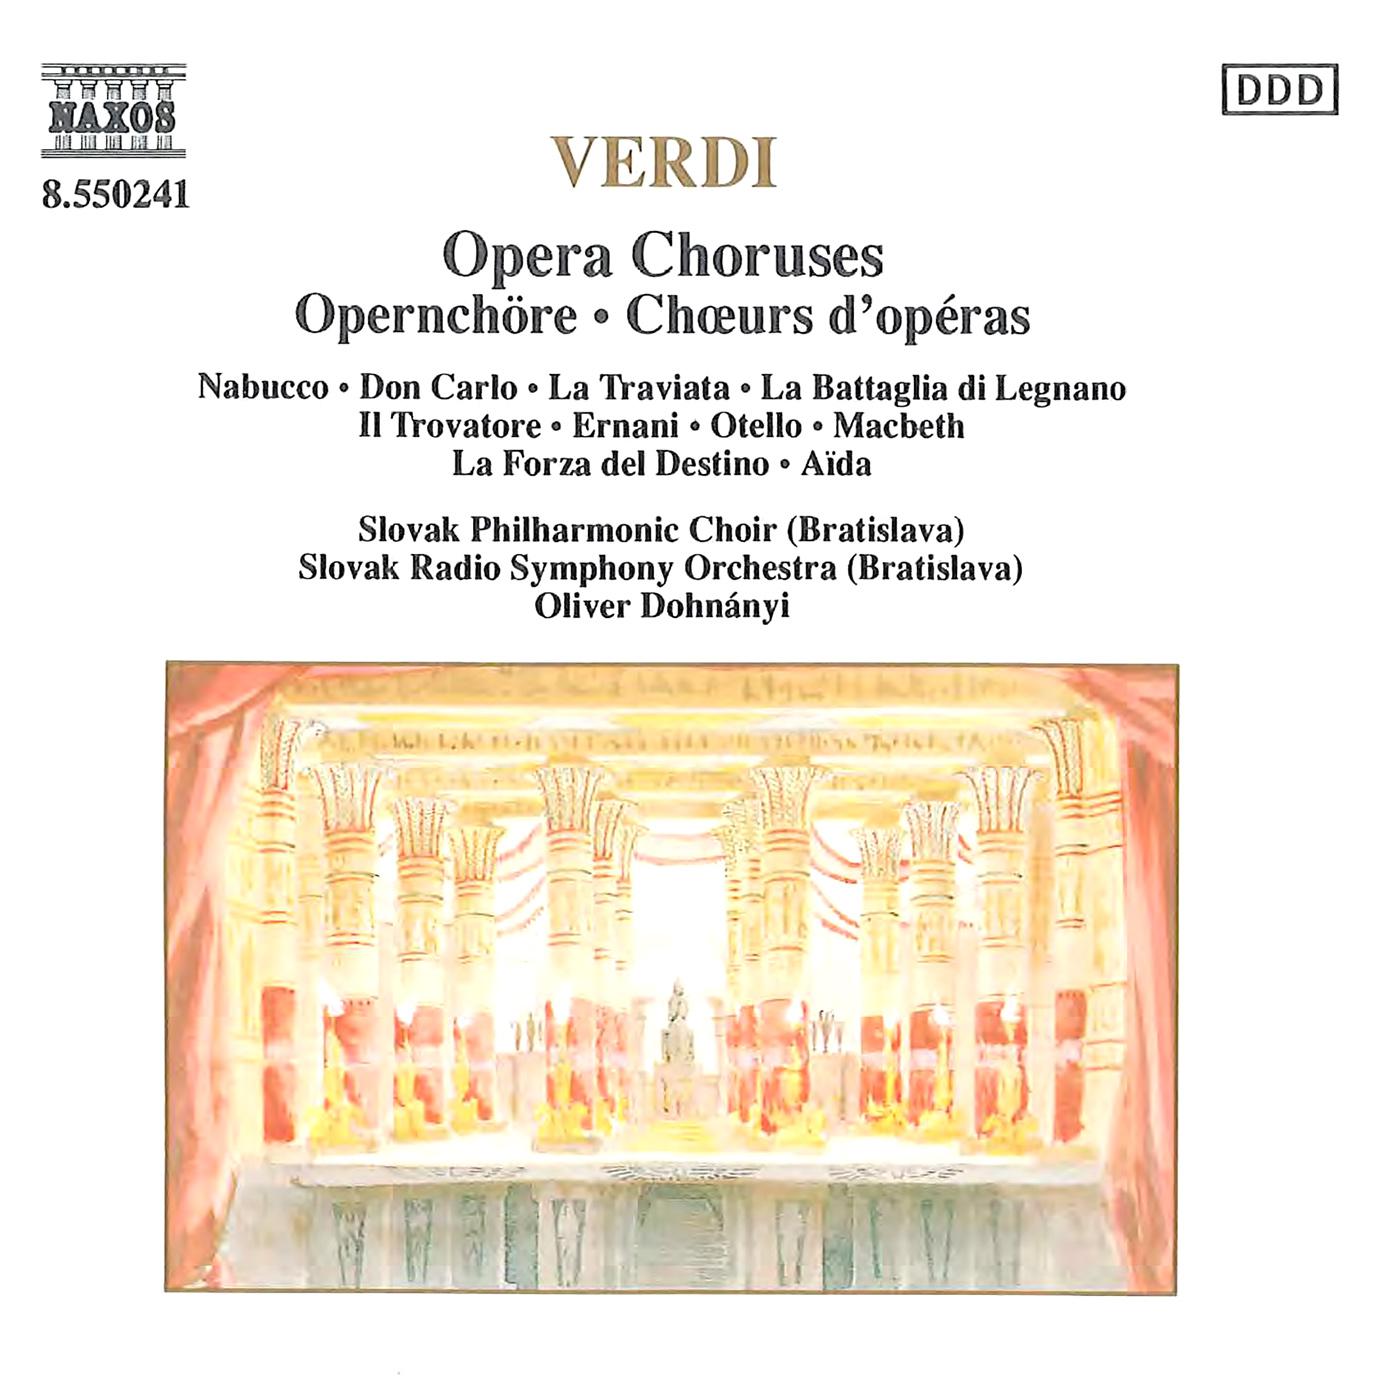 VERDI: Opera Choruses